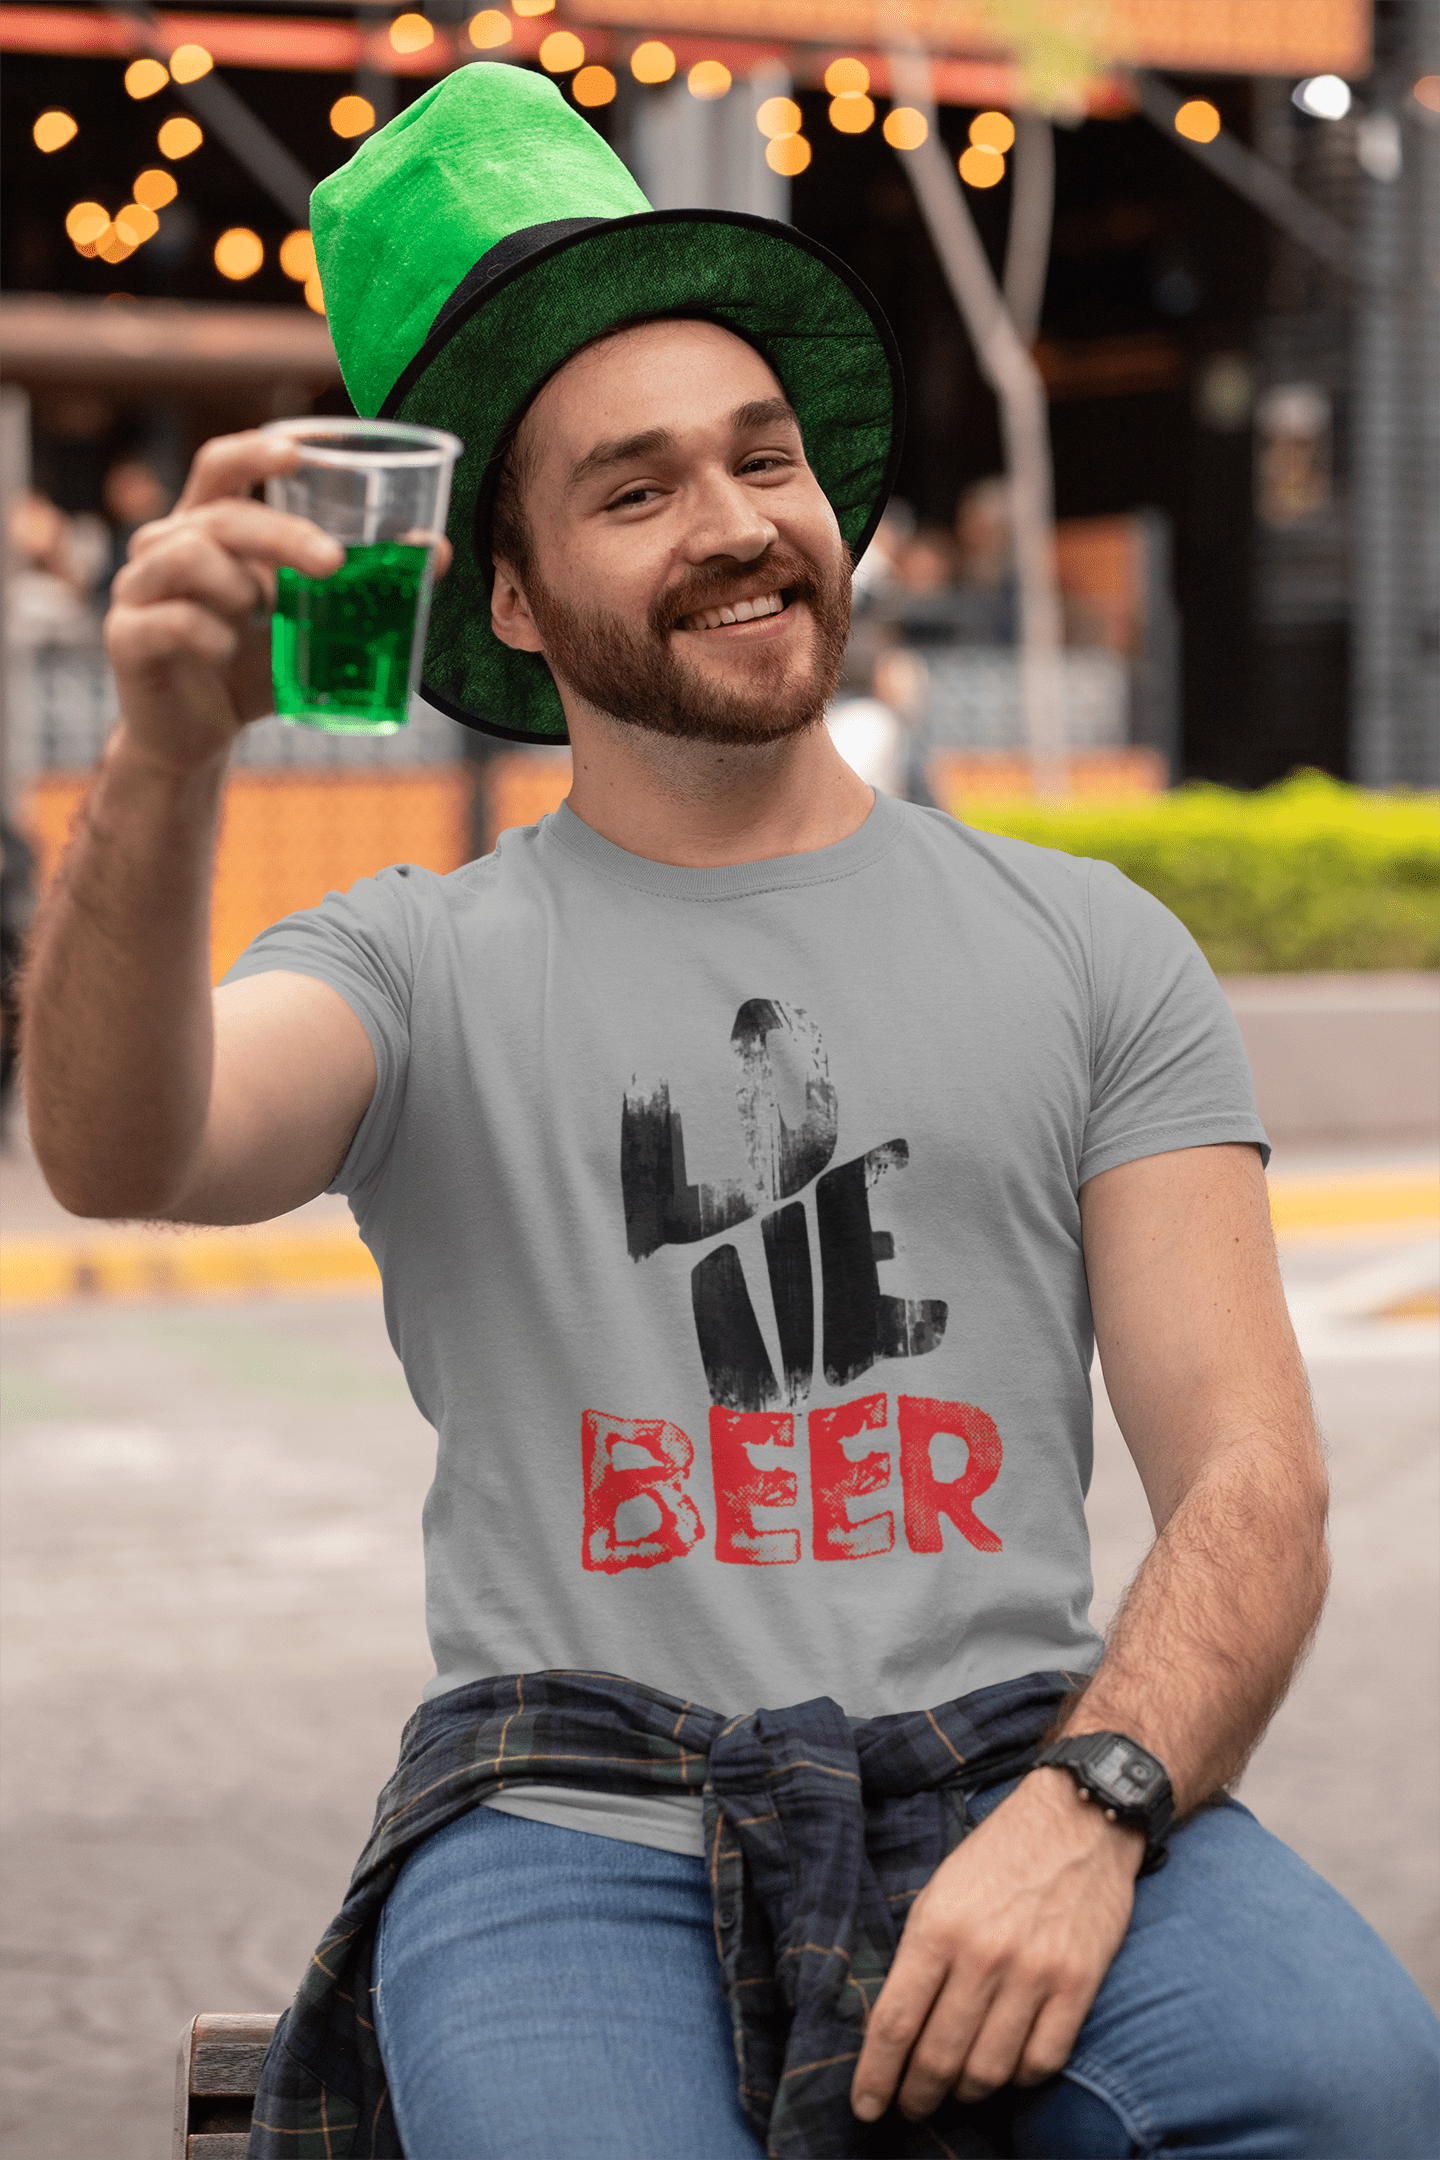 Ultrabasic - Homme T-Shirt Graphique Love Beer Gris Chiné